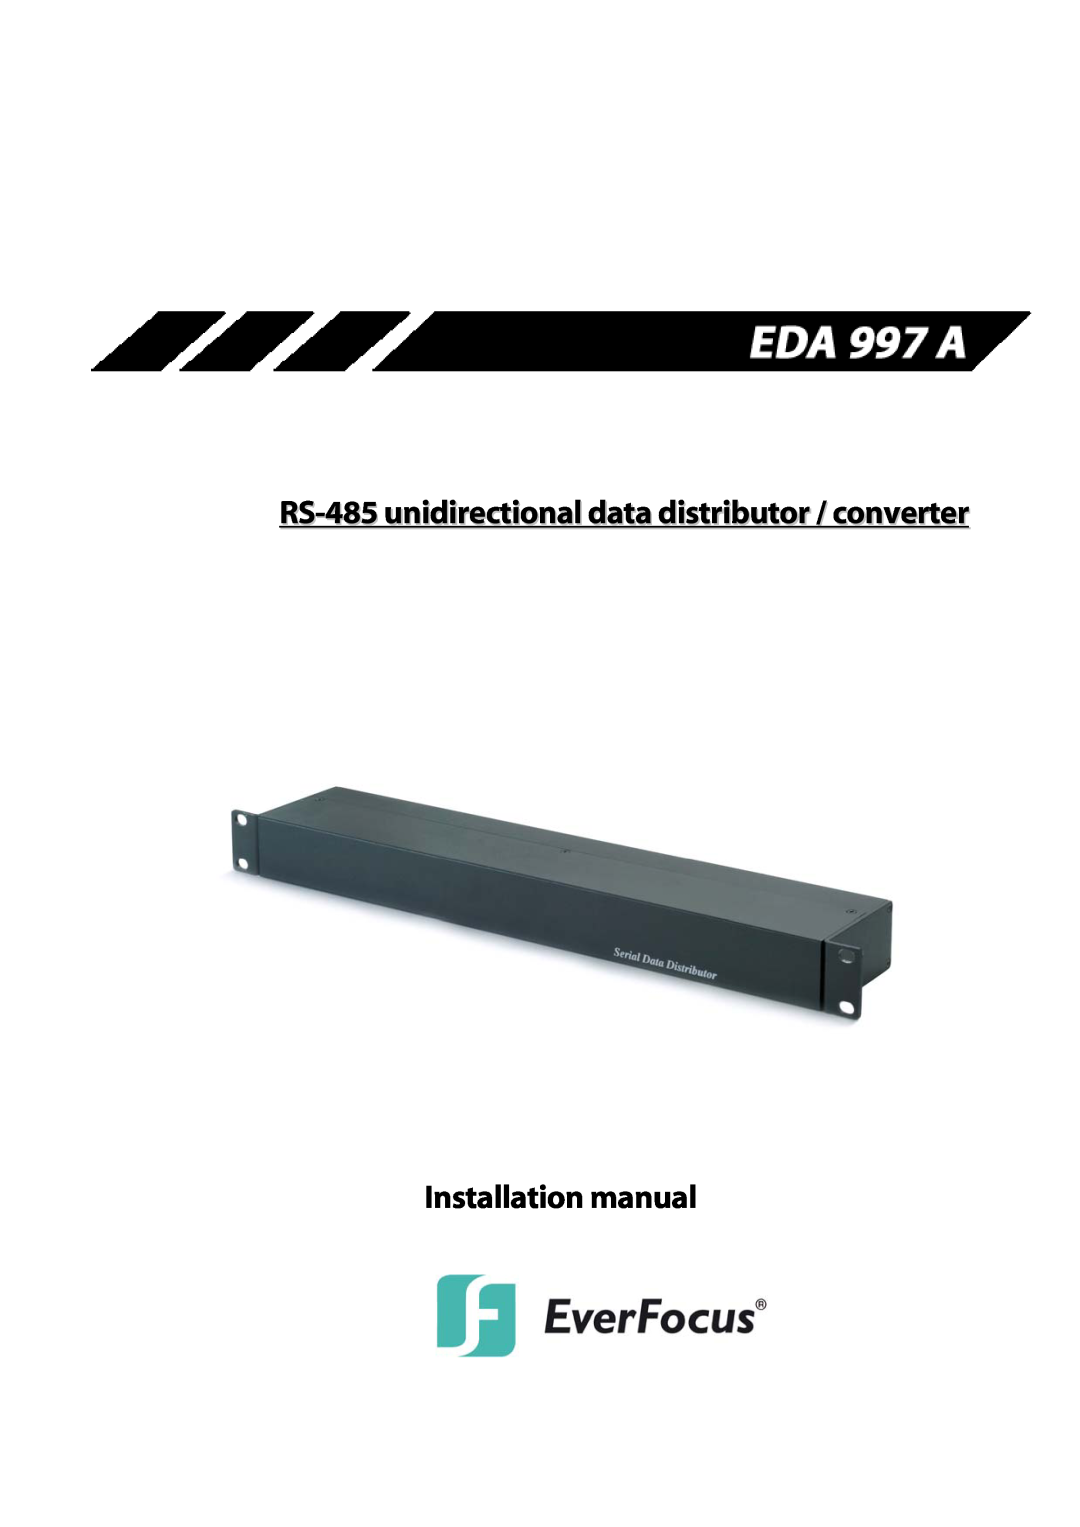 EverFocus EDA997A installation manual RS-485 unidirectional data distributor / converter, Installation manual 